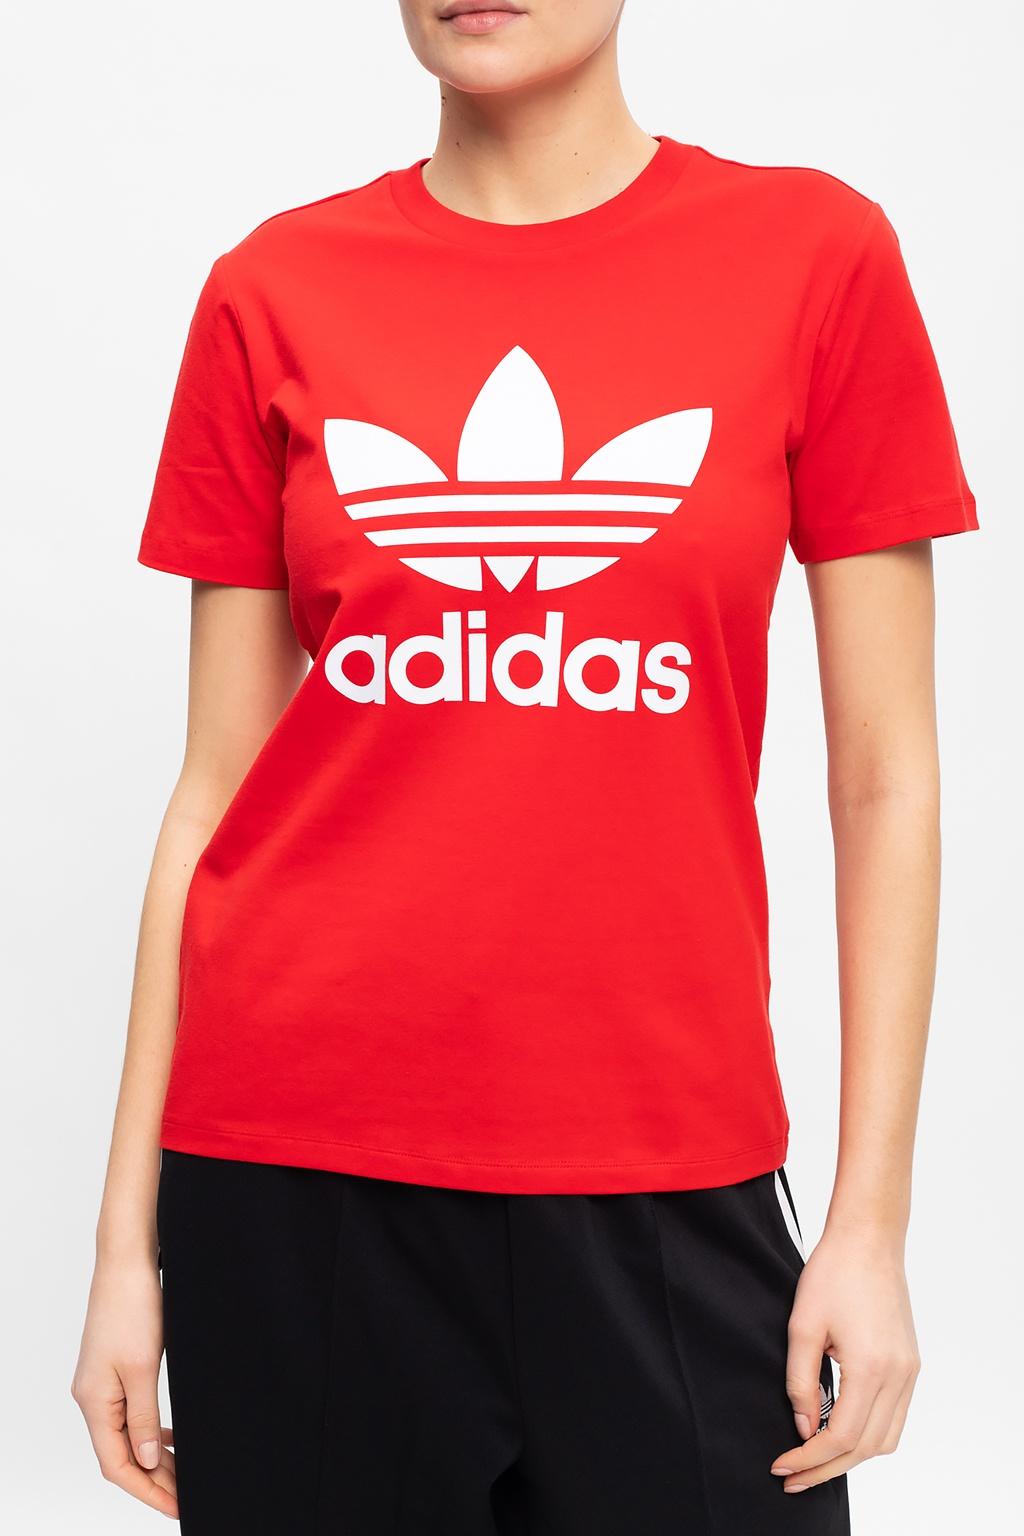 adidas Originals Cotton Logo T-shirt in Red - Lyst